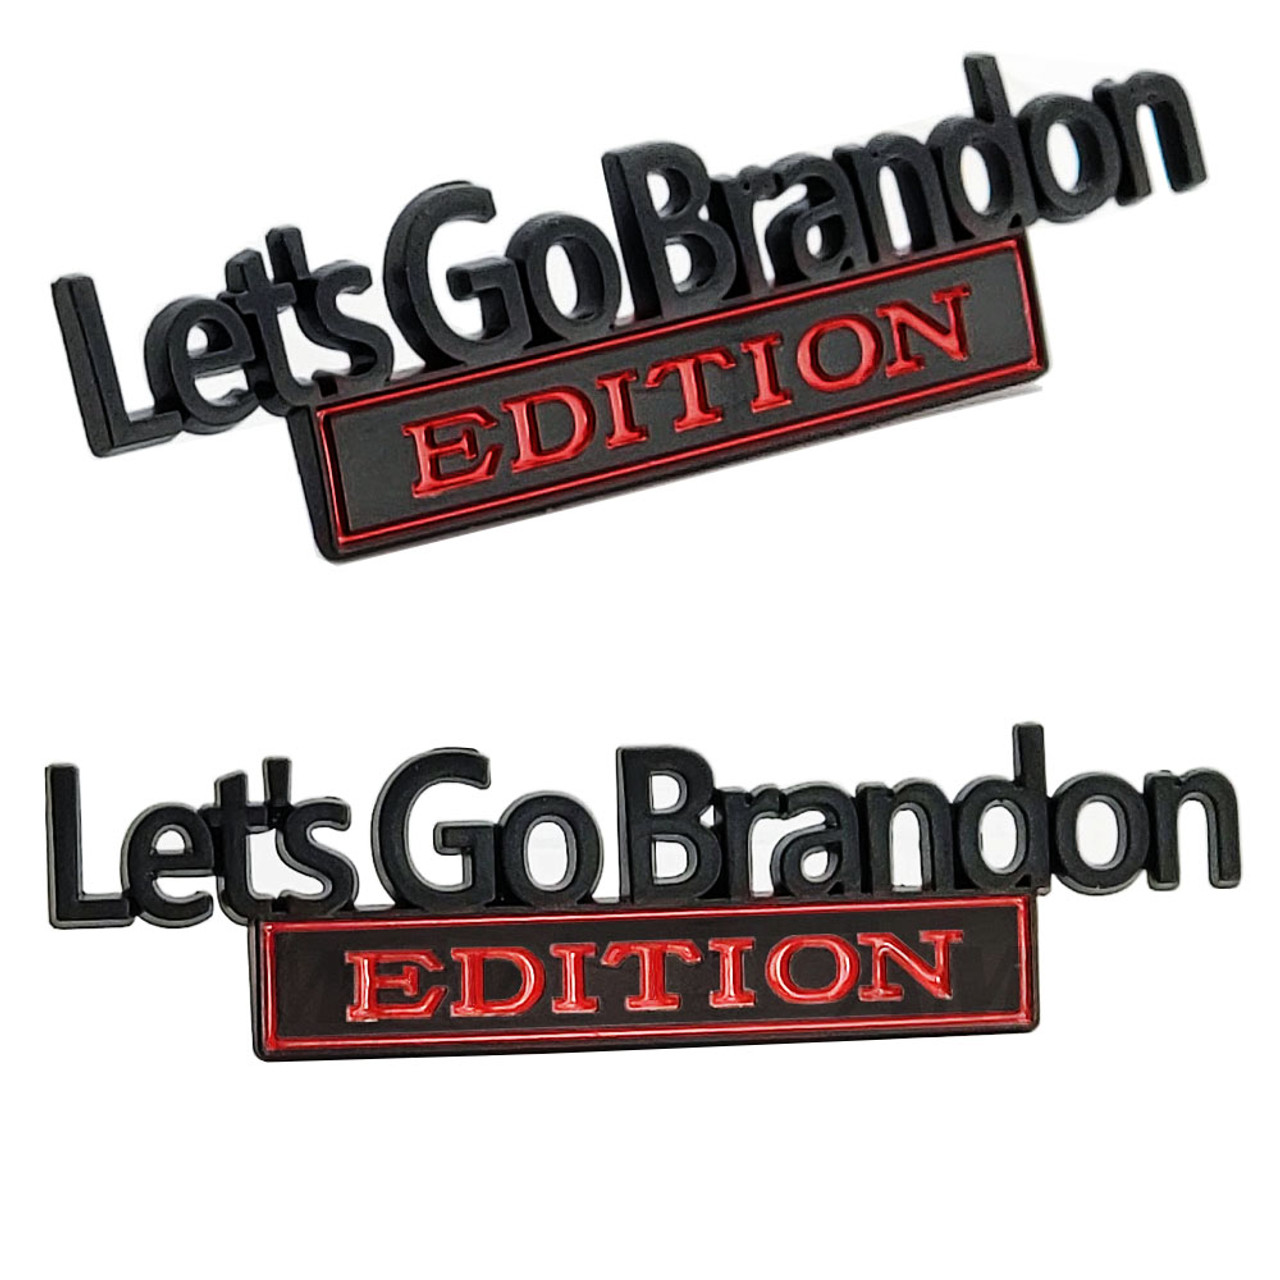 Let's Go Brandon Edition Emblem - UPR Products